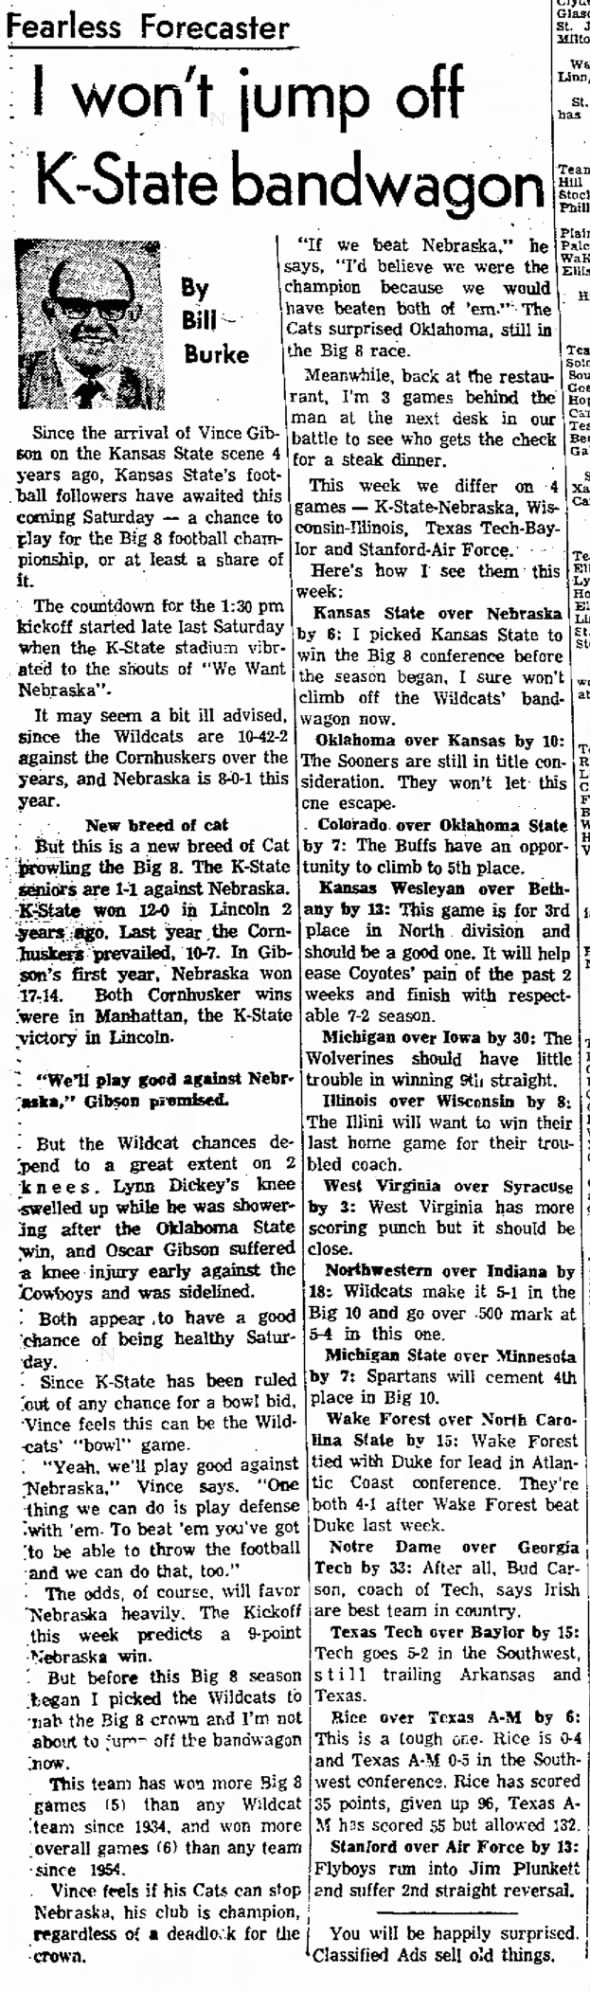 1970 Kansas State-Nebraska prediction